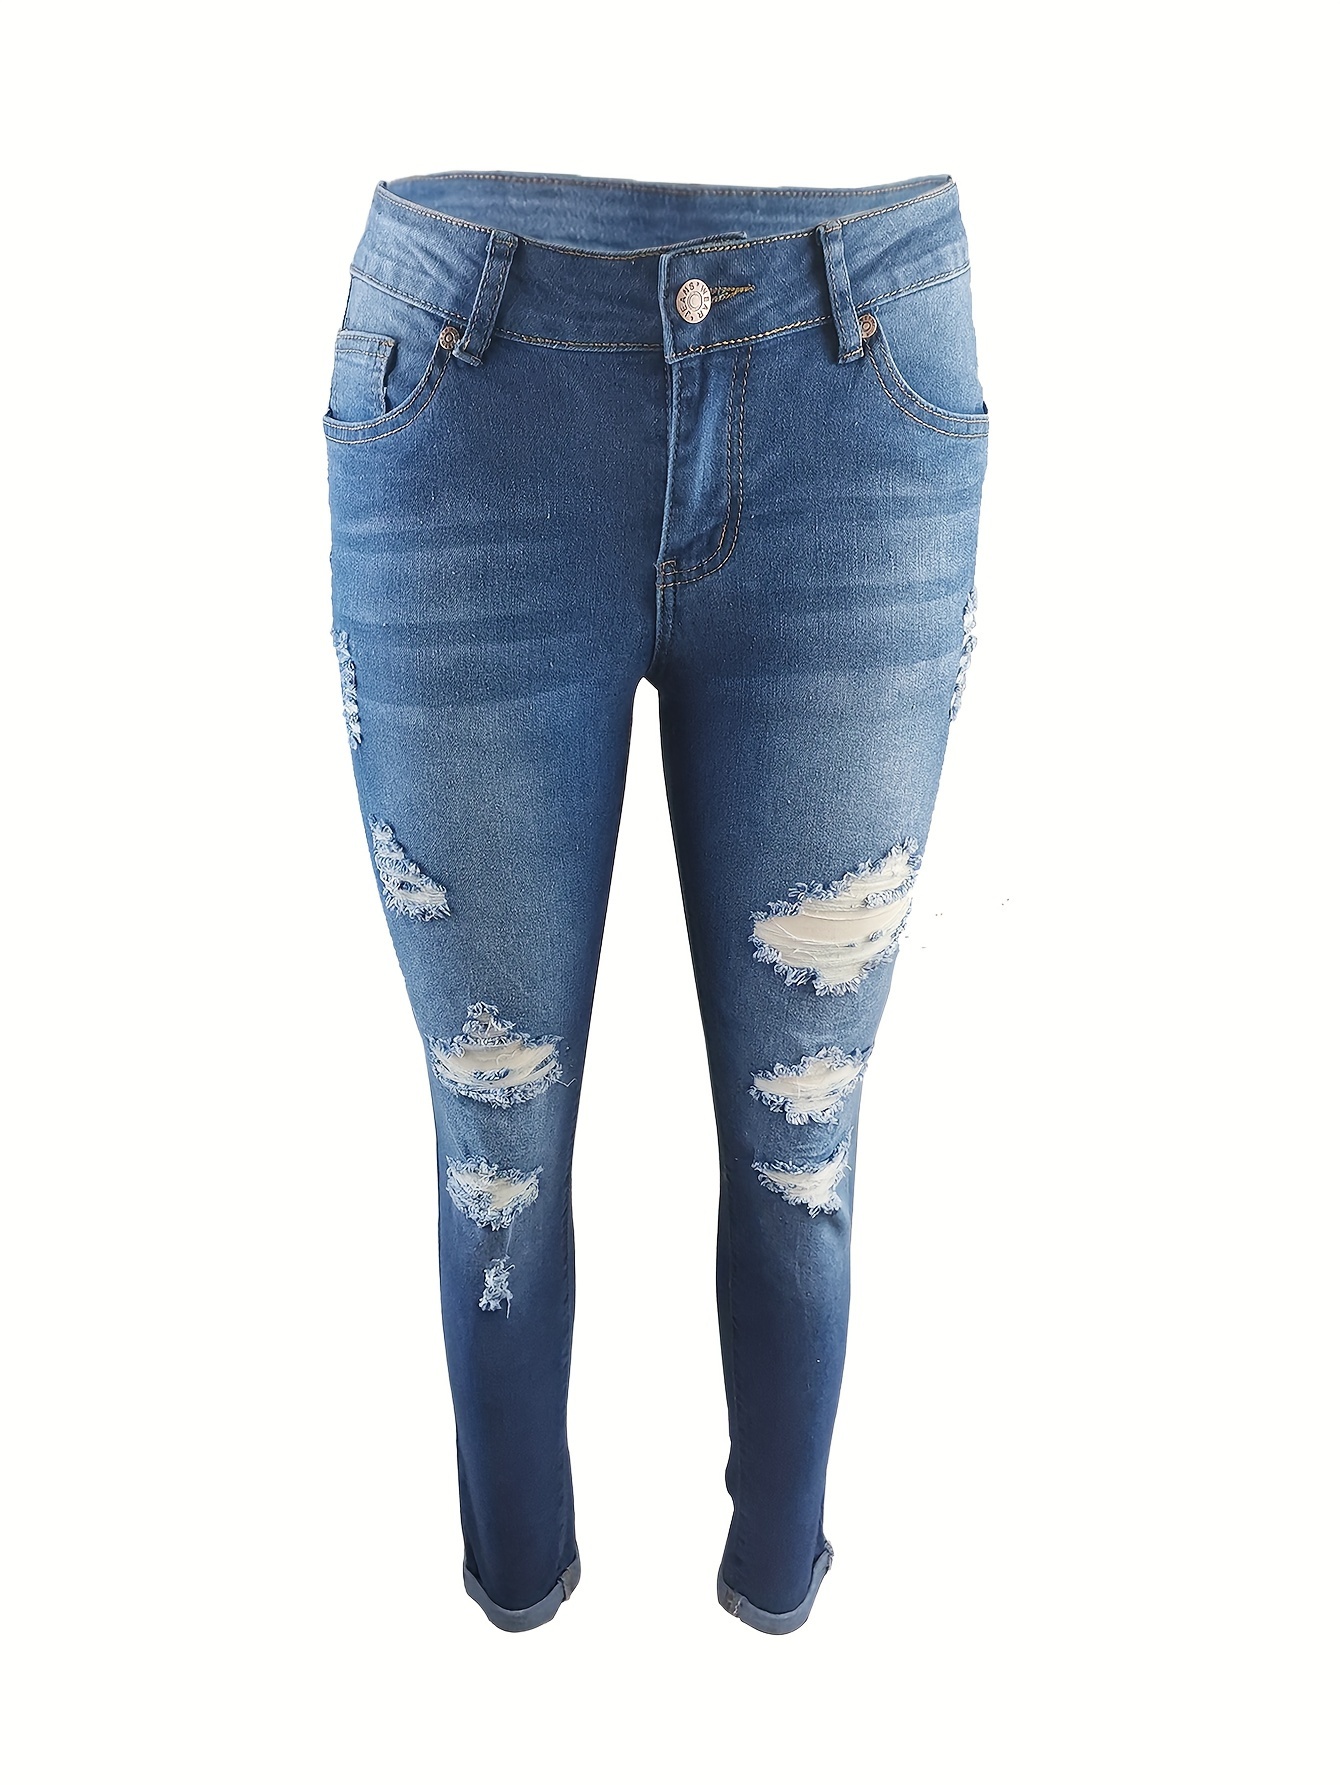 Blue Ripped Holes Skinny Jeans Slim Fit Slash Pockets Slight